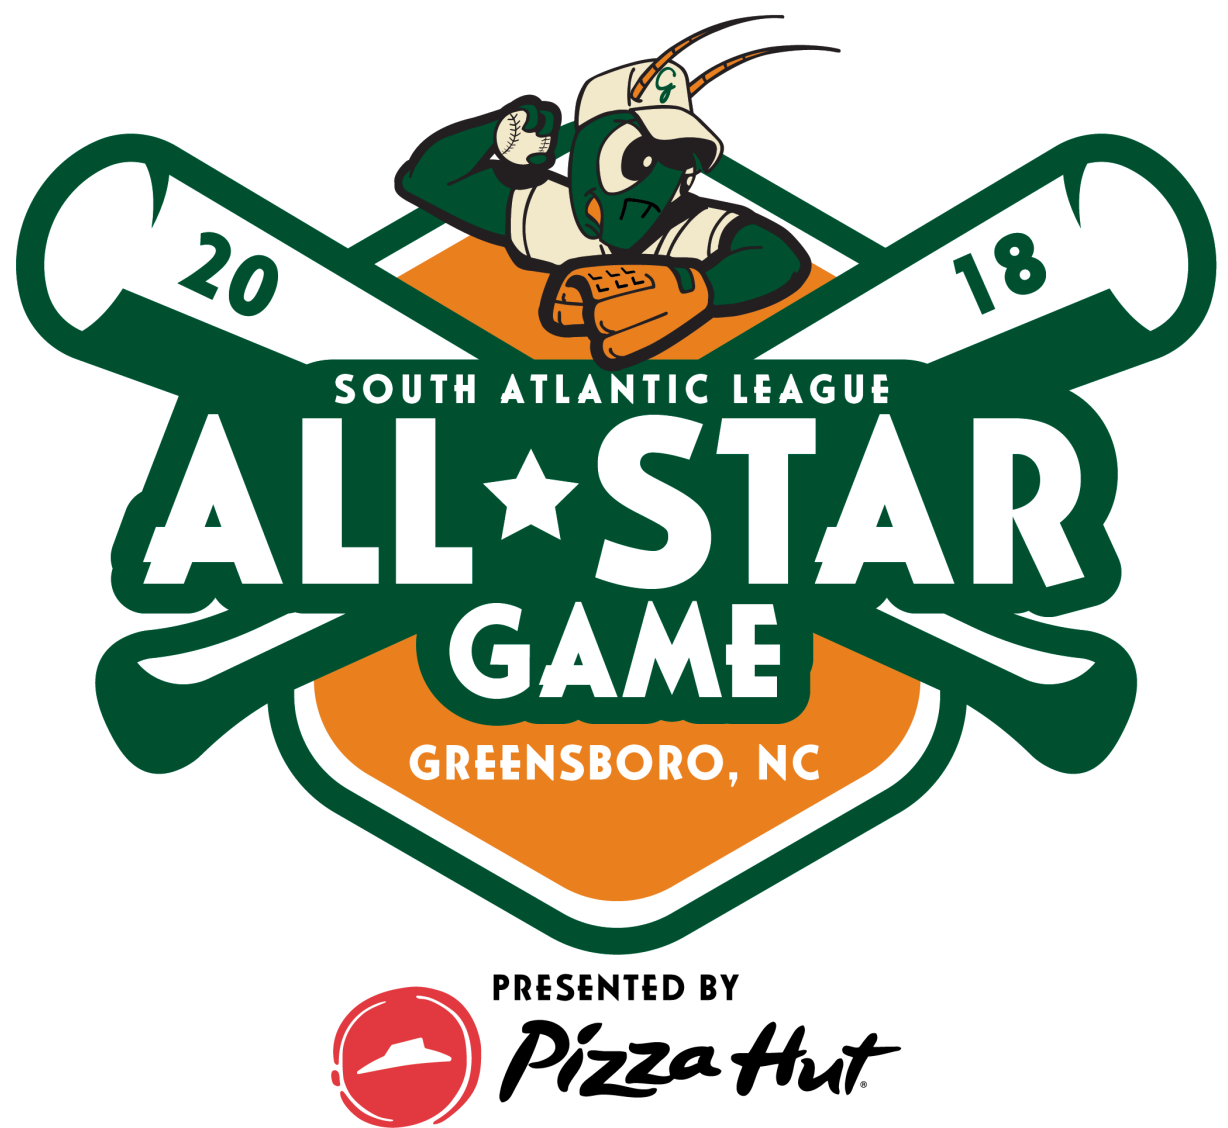 South Atlantic League All-star Game Logo - South Atlantic League All Star Game Logo (1619x1279), Png Download